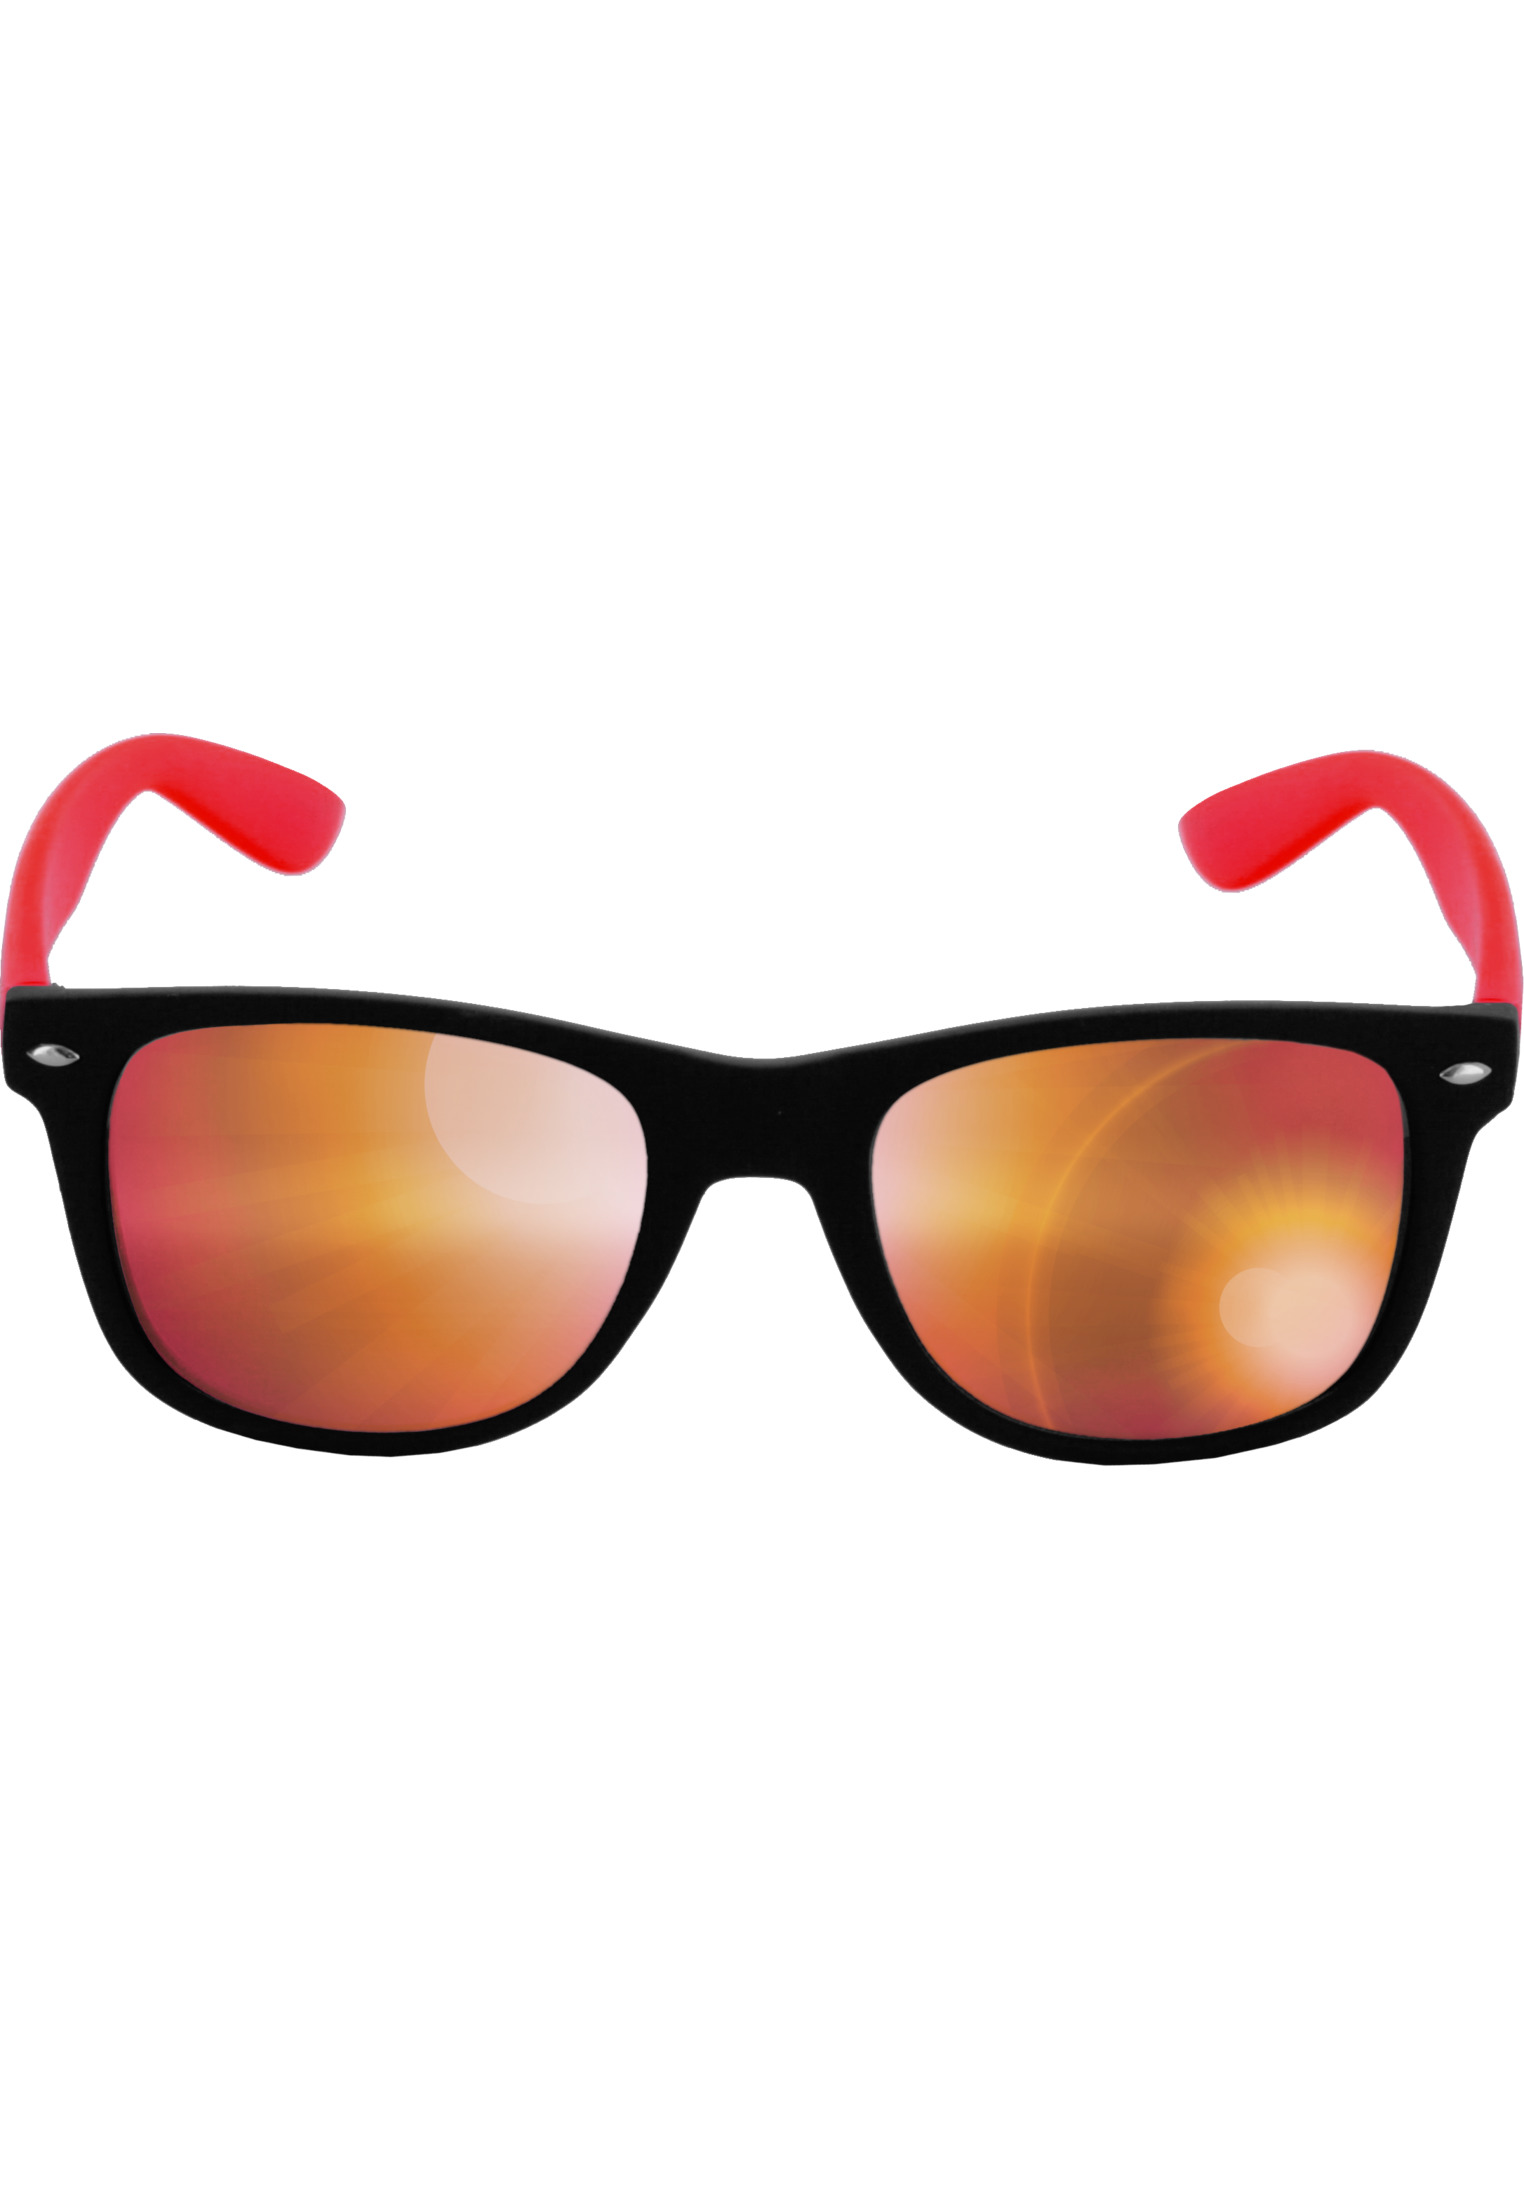 MSTRDS Sunglasses Likoma Mirror